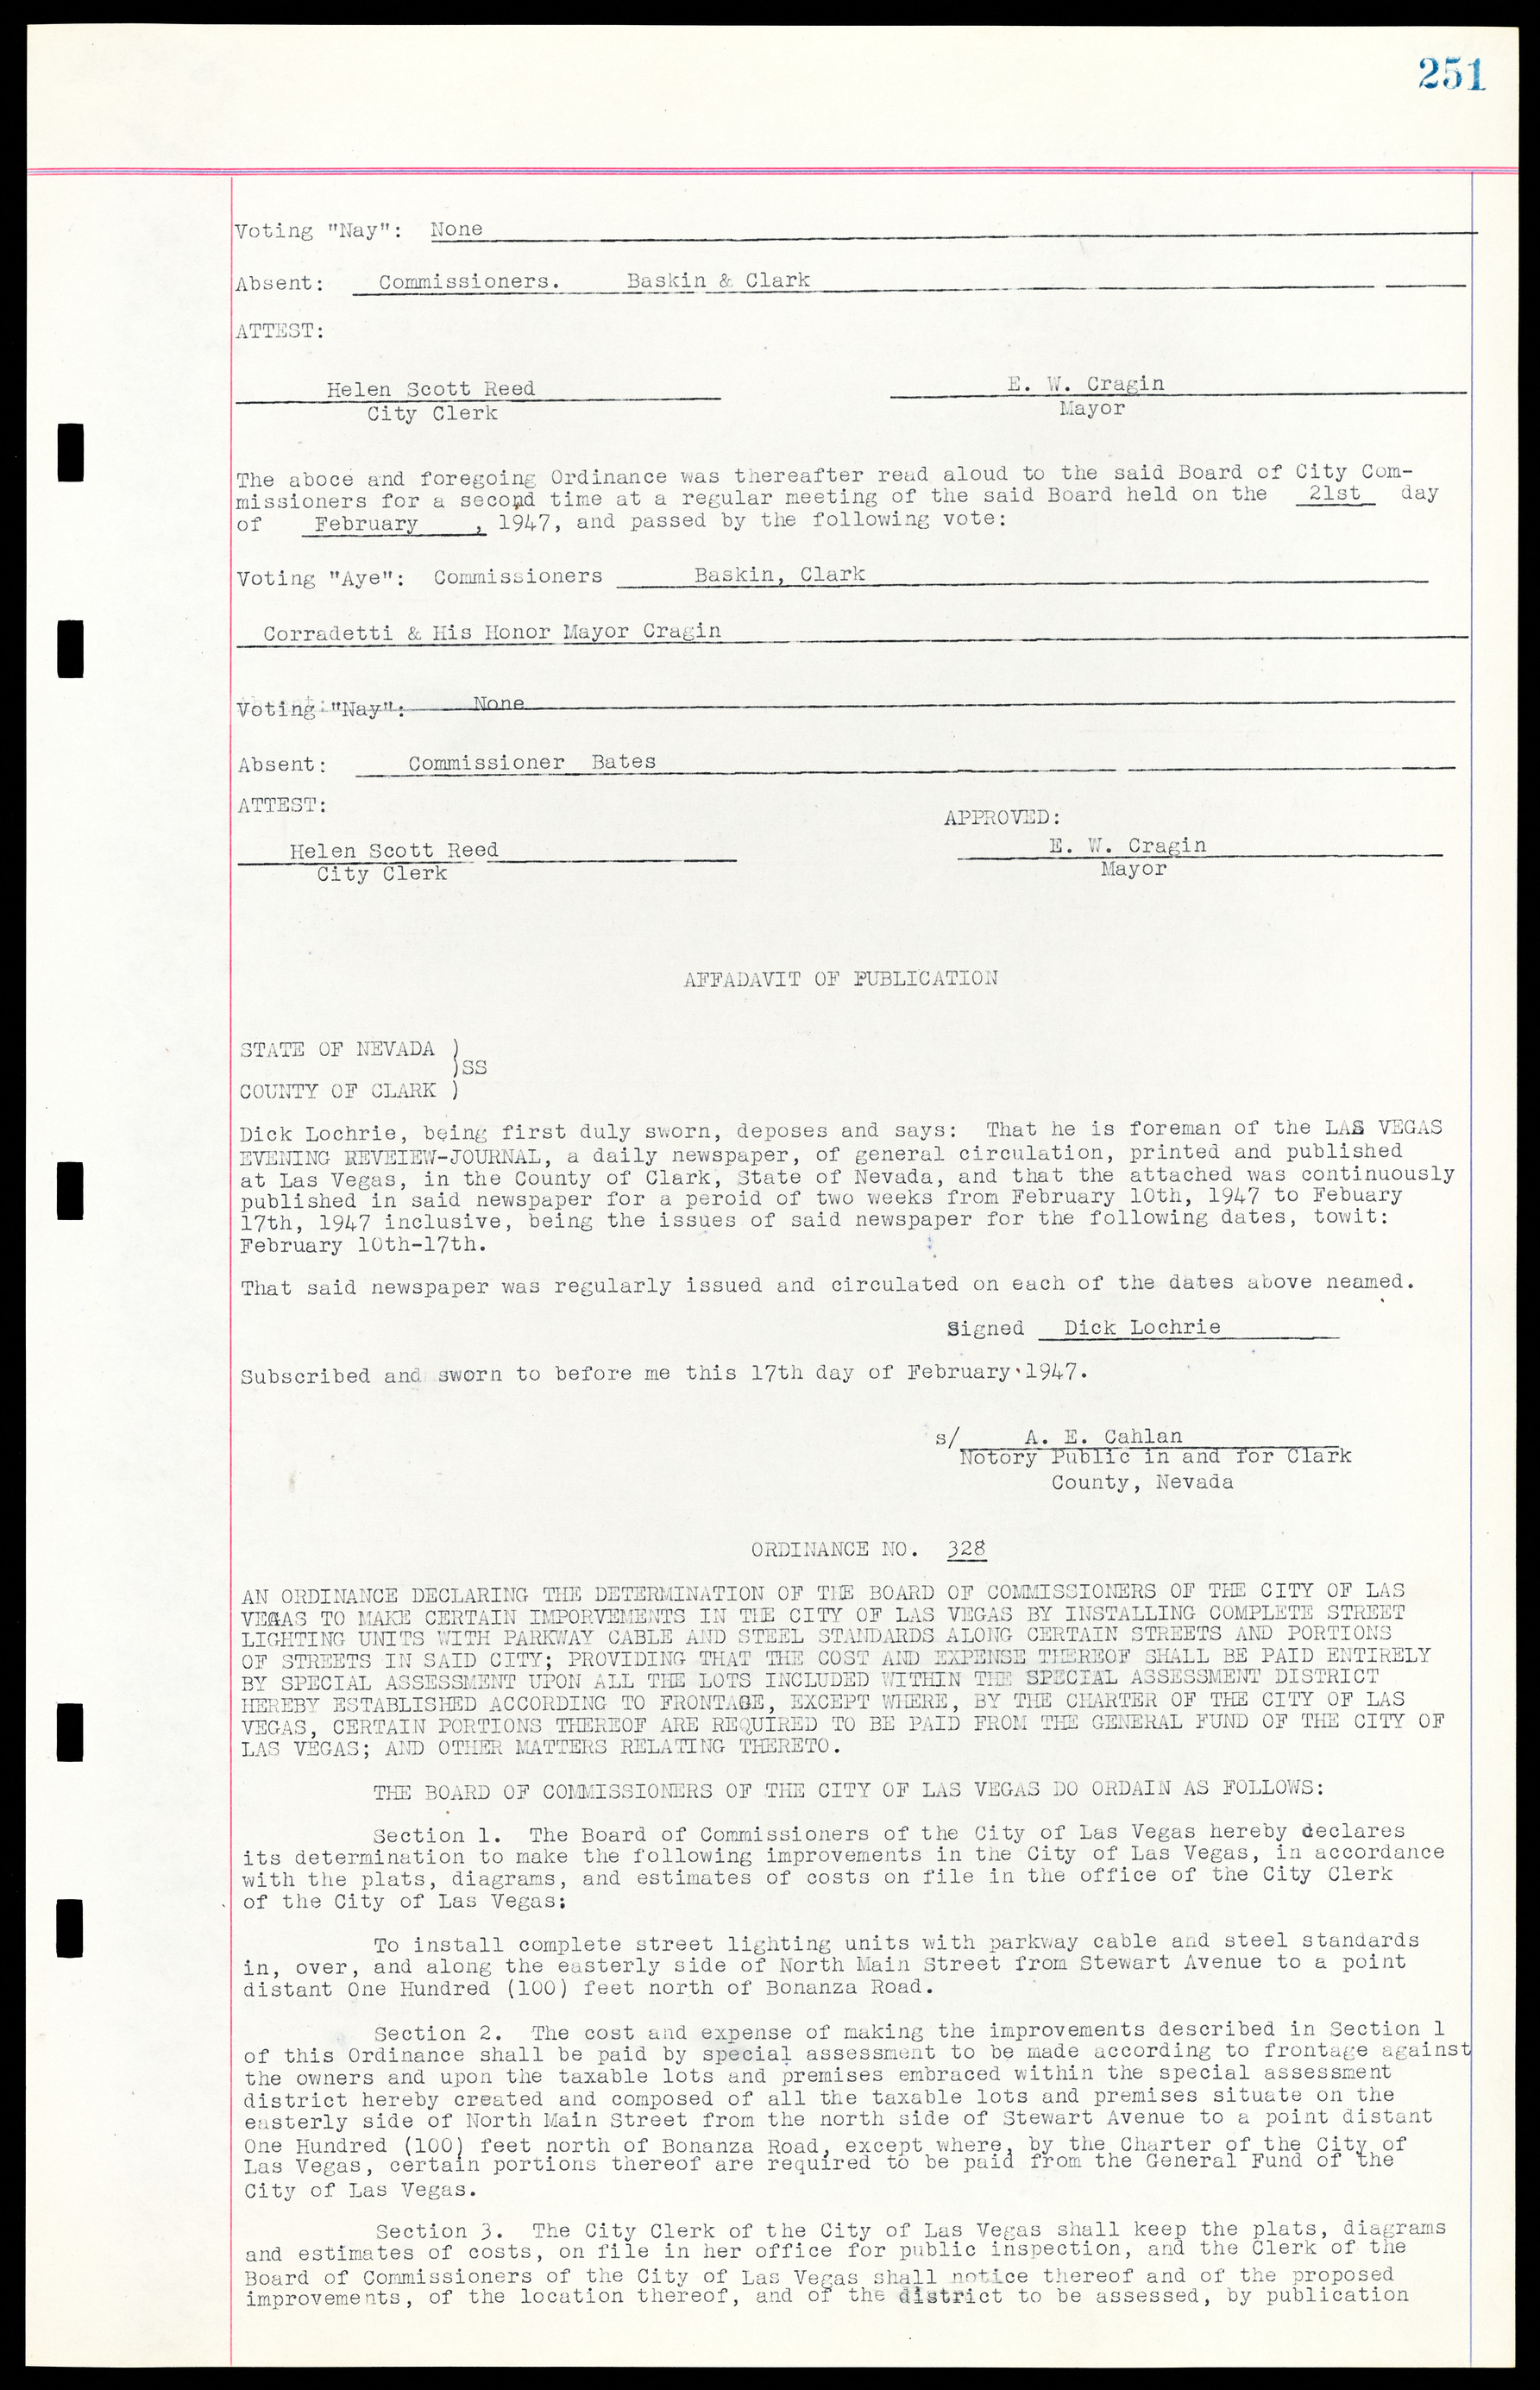 Las Vegas City Ordinances, March 31, 1933 to October 25, 1950, lvc000014-280